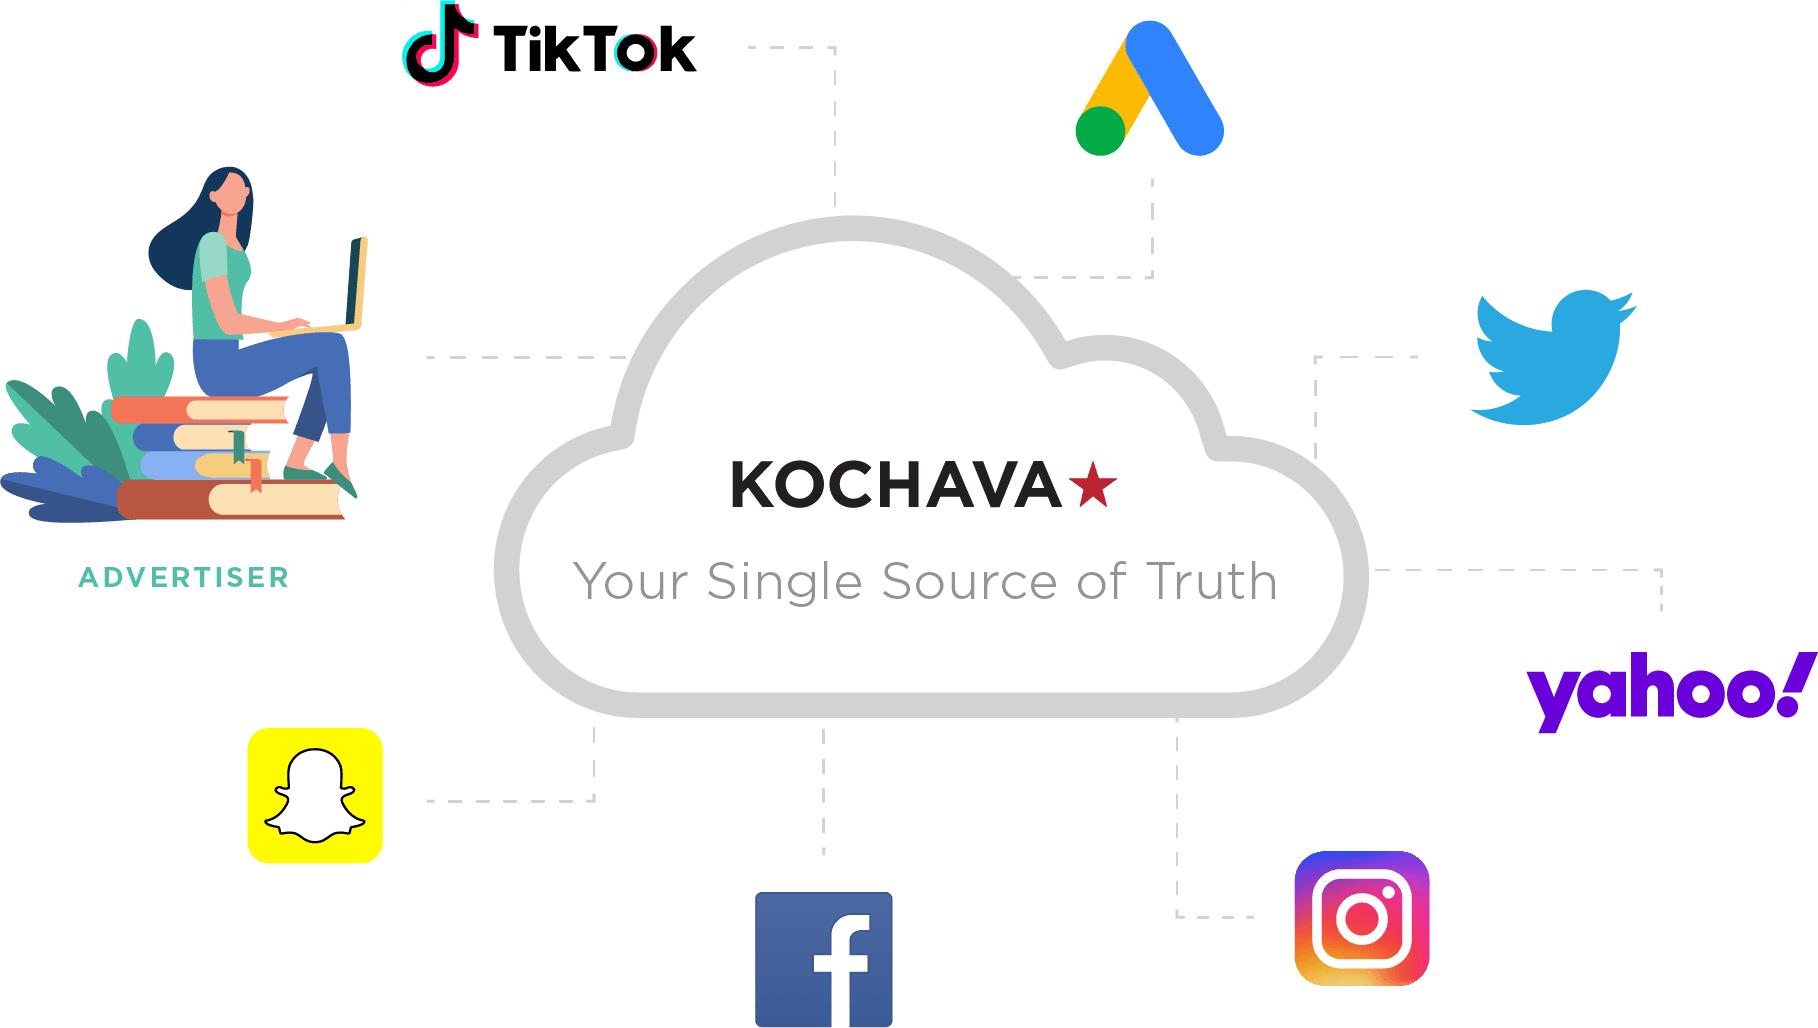 Kochava - Your Single Source of Truth